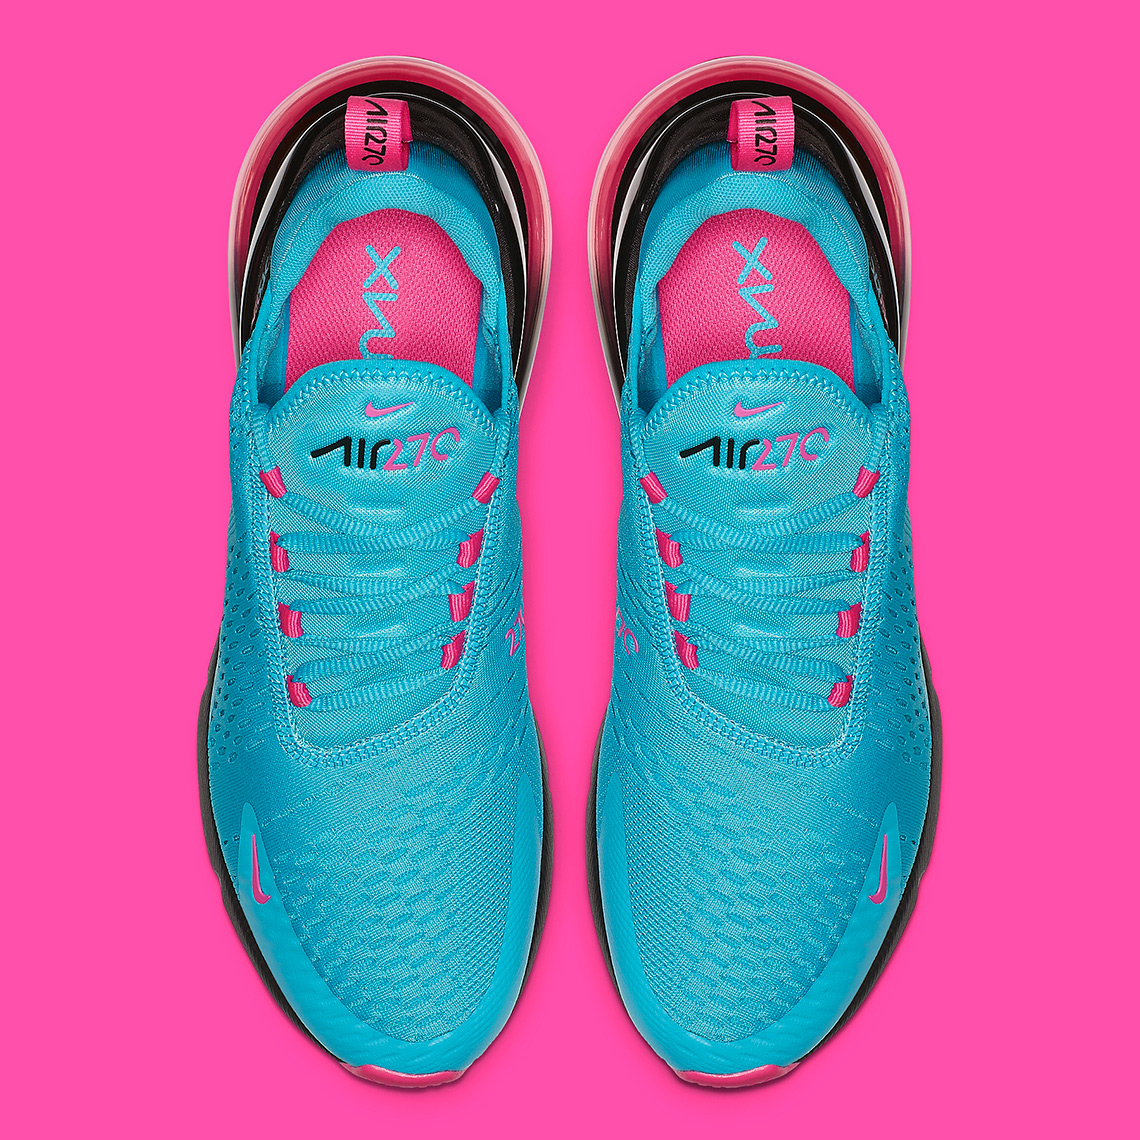 Nike Air Max 270 Pink + Blue BV6078-400 